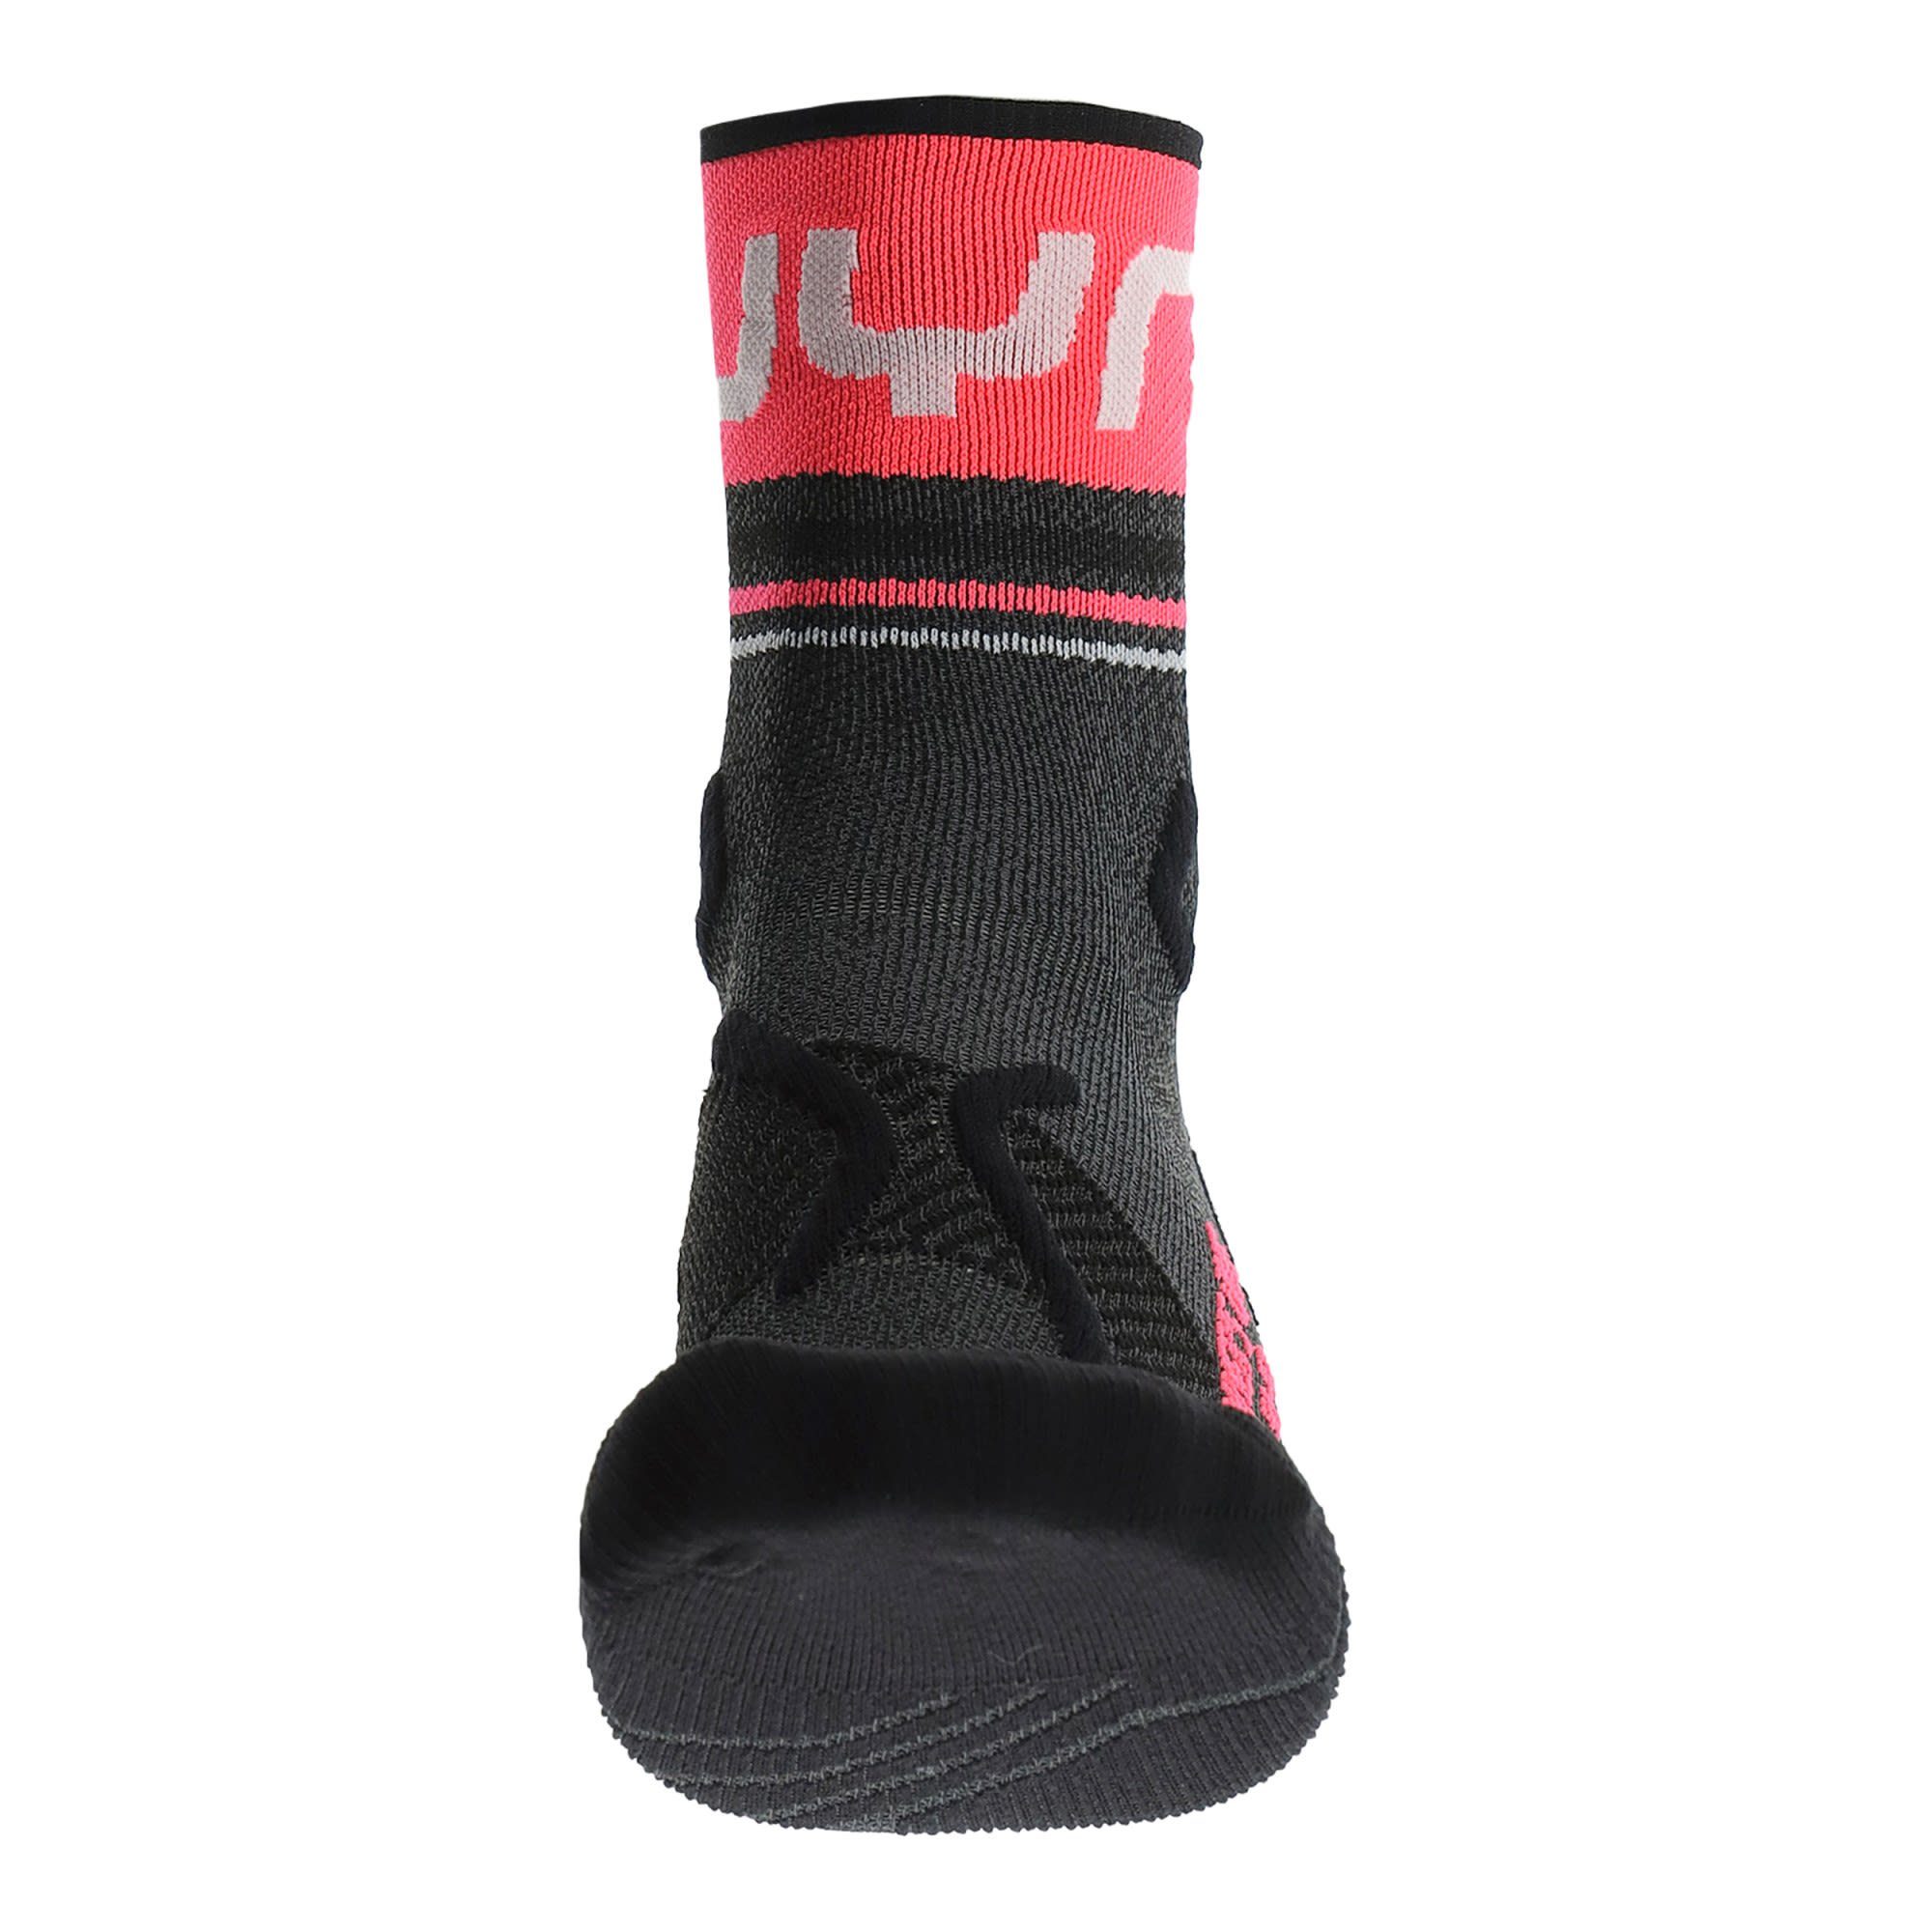 Socks Uyn W Grey One - Thermosocken Damen Pink Melange UYN Short Runners